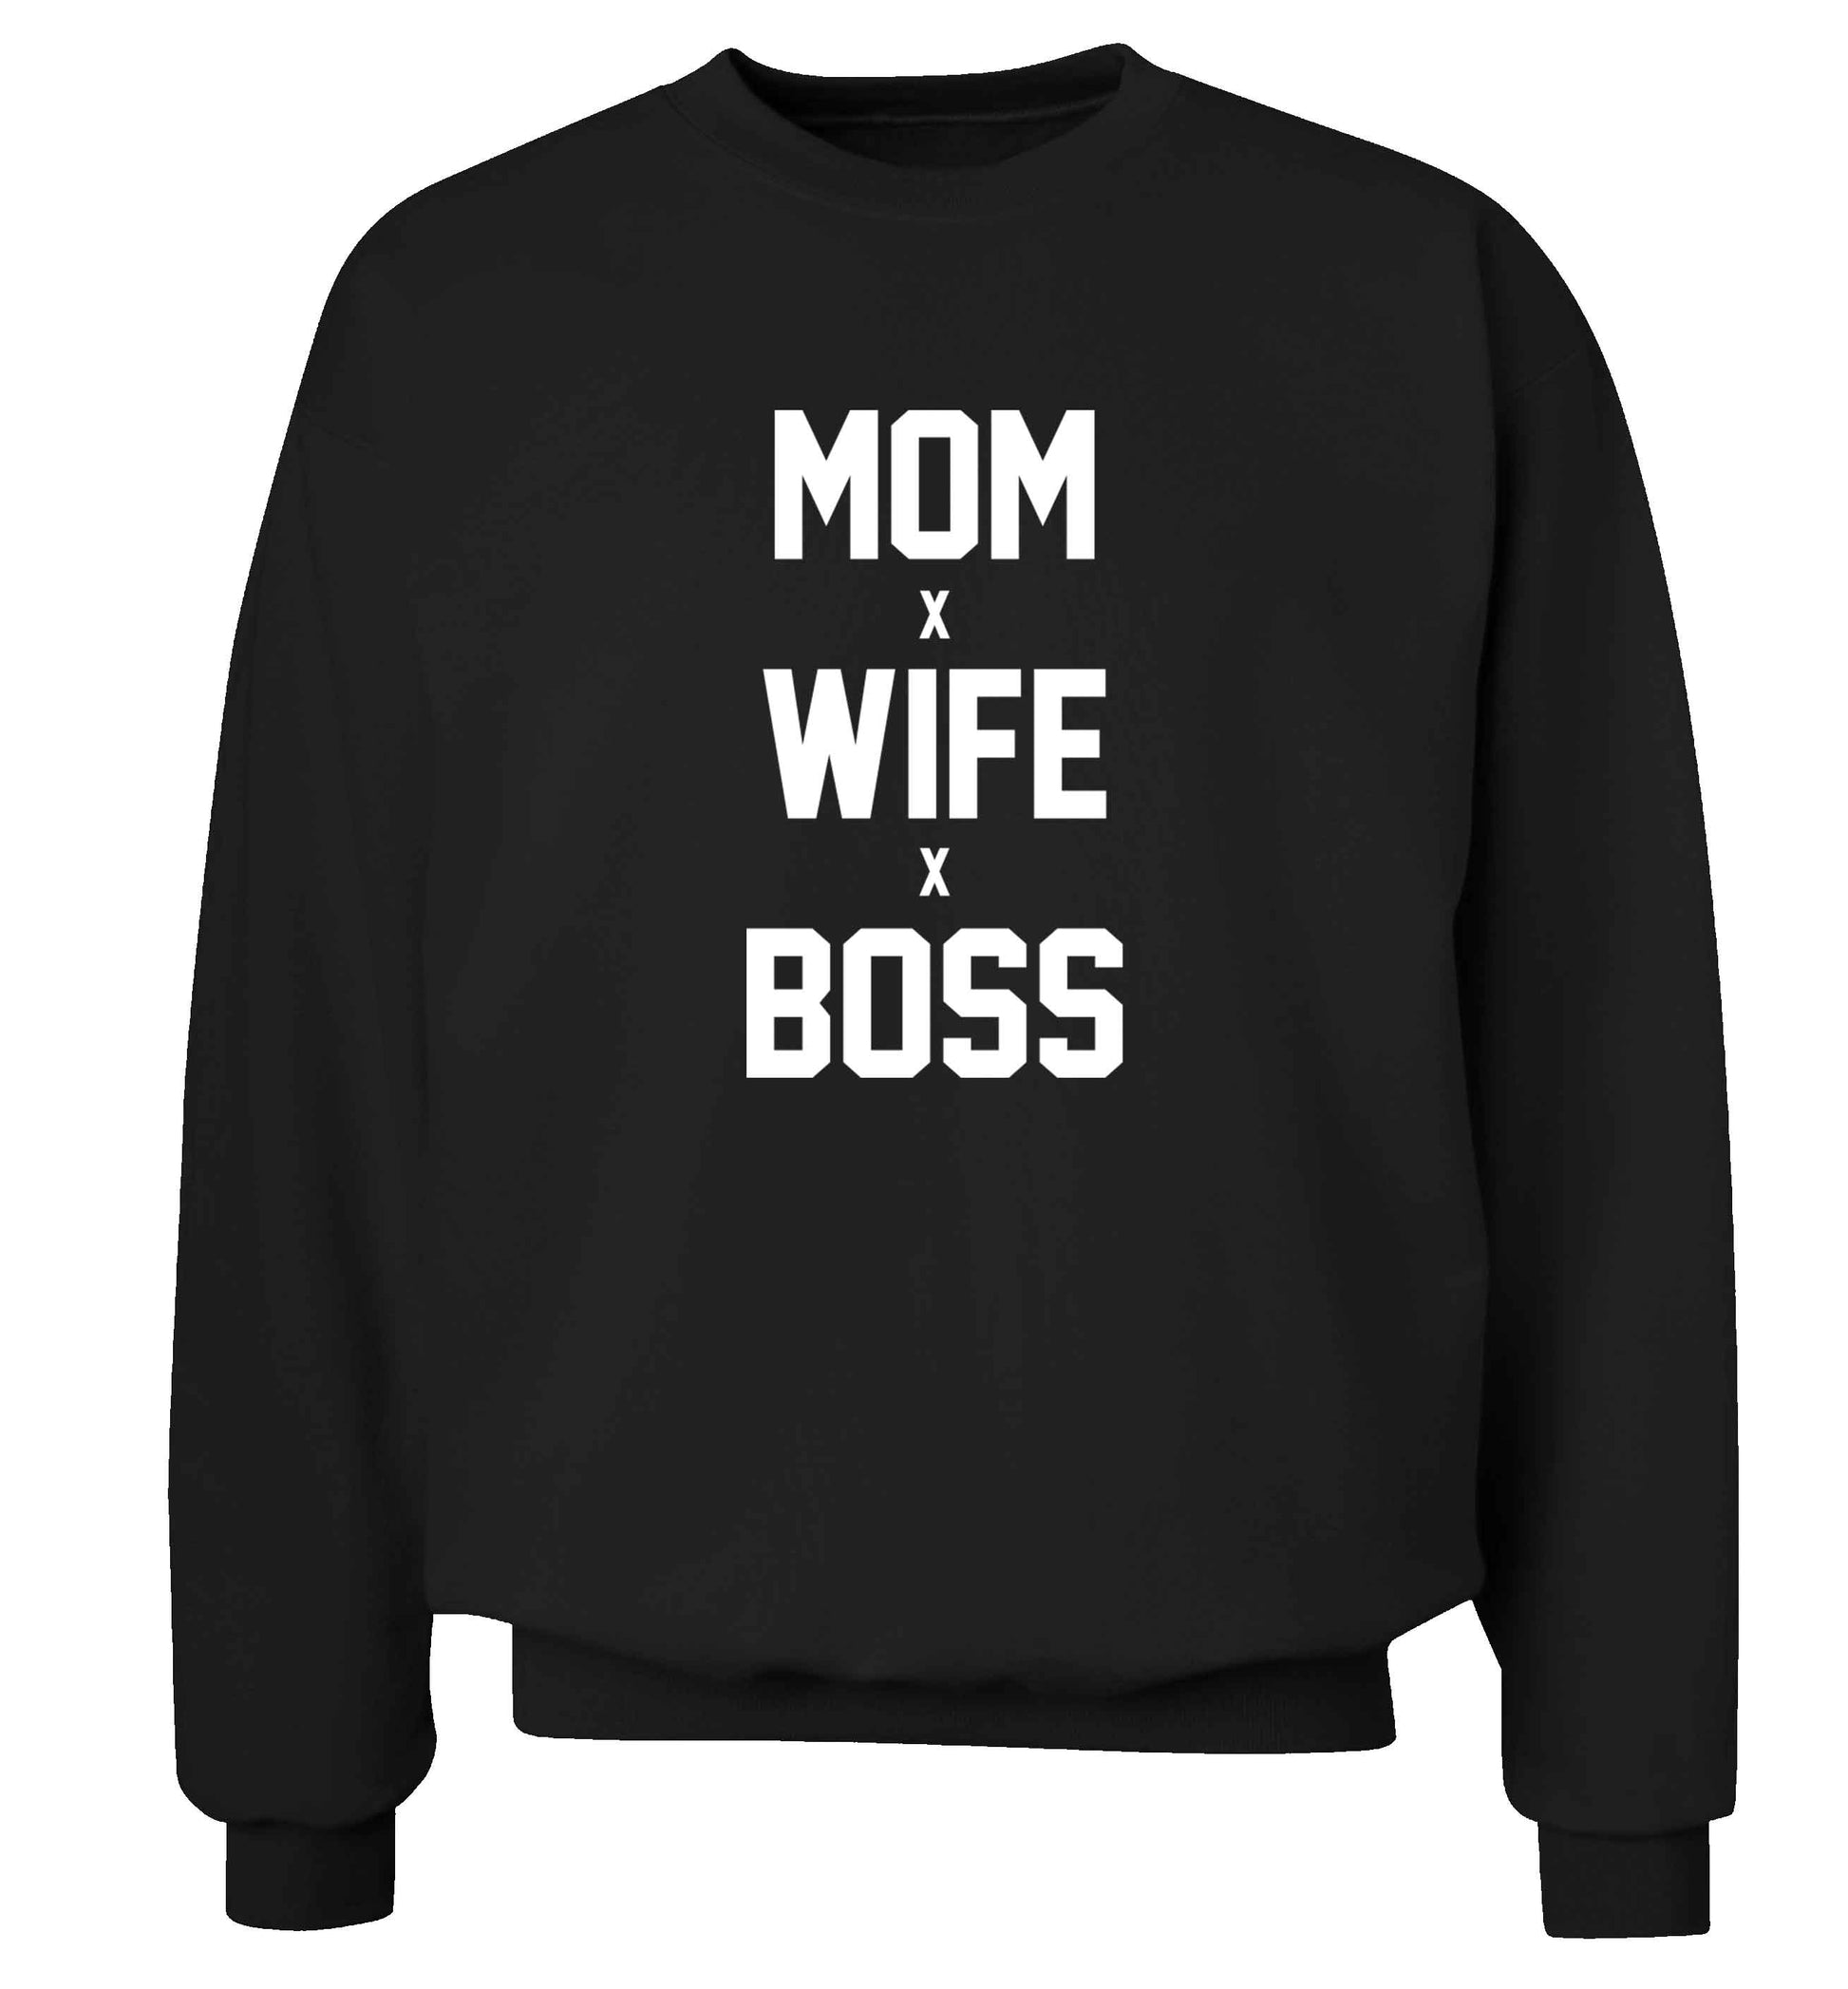 Mum wife boss adult's unisex black sweater 2XL